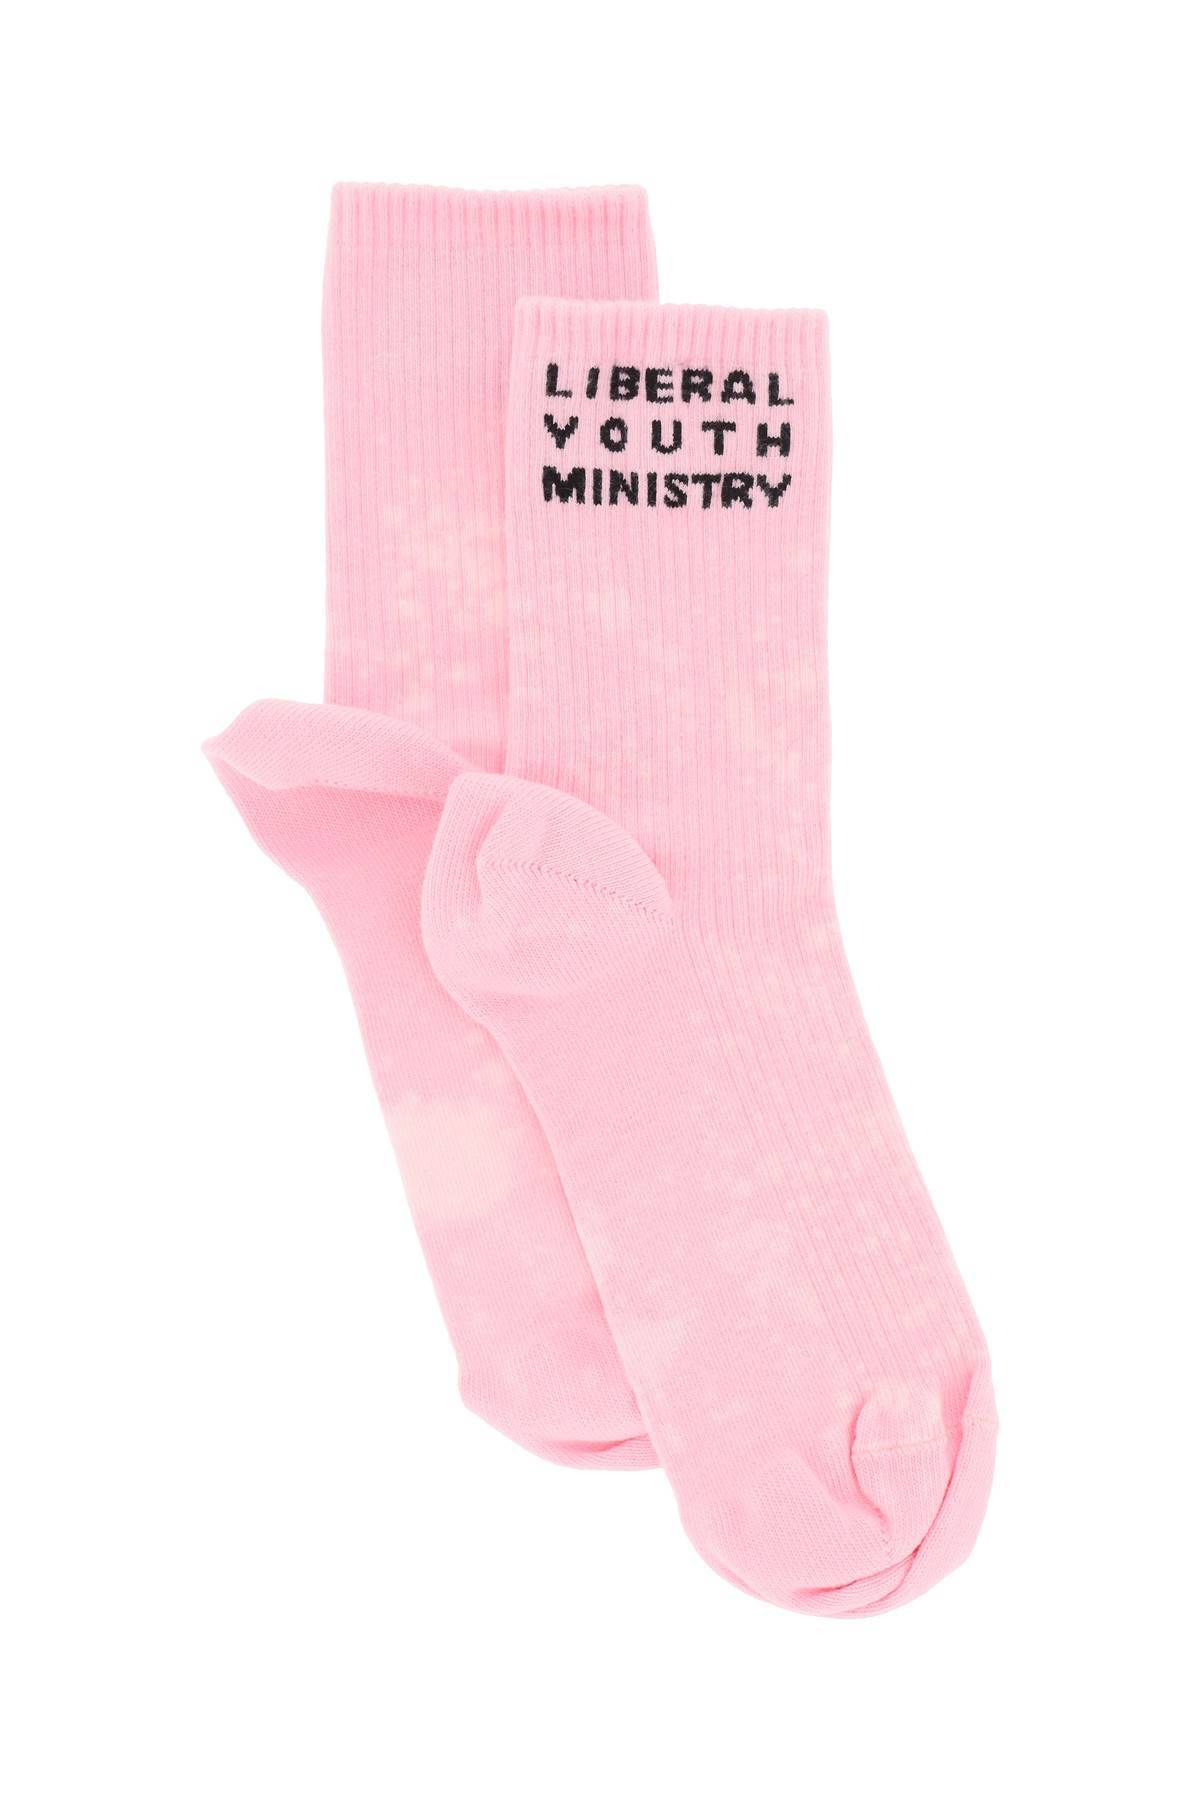 Liberal Youth Ministry LIBERAL YOUTH MINISTRY logo sport socks